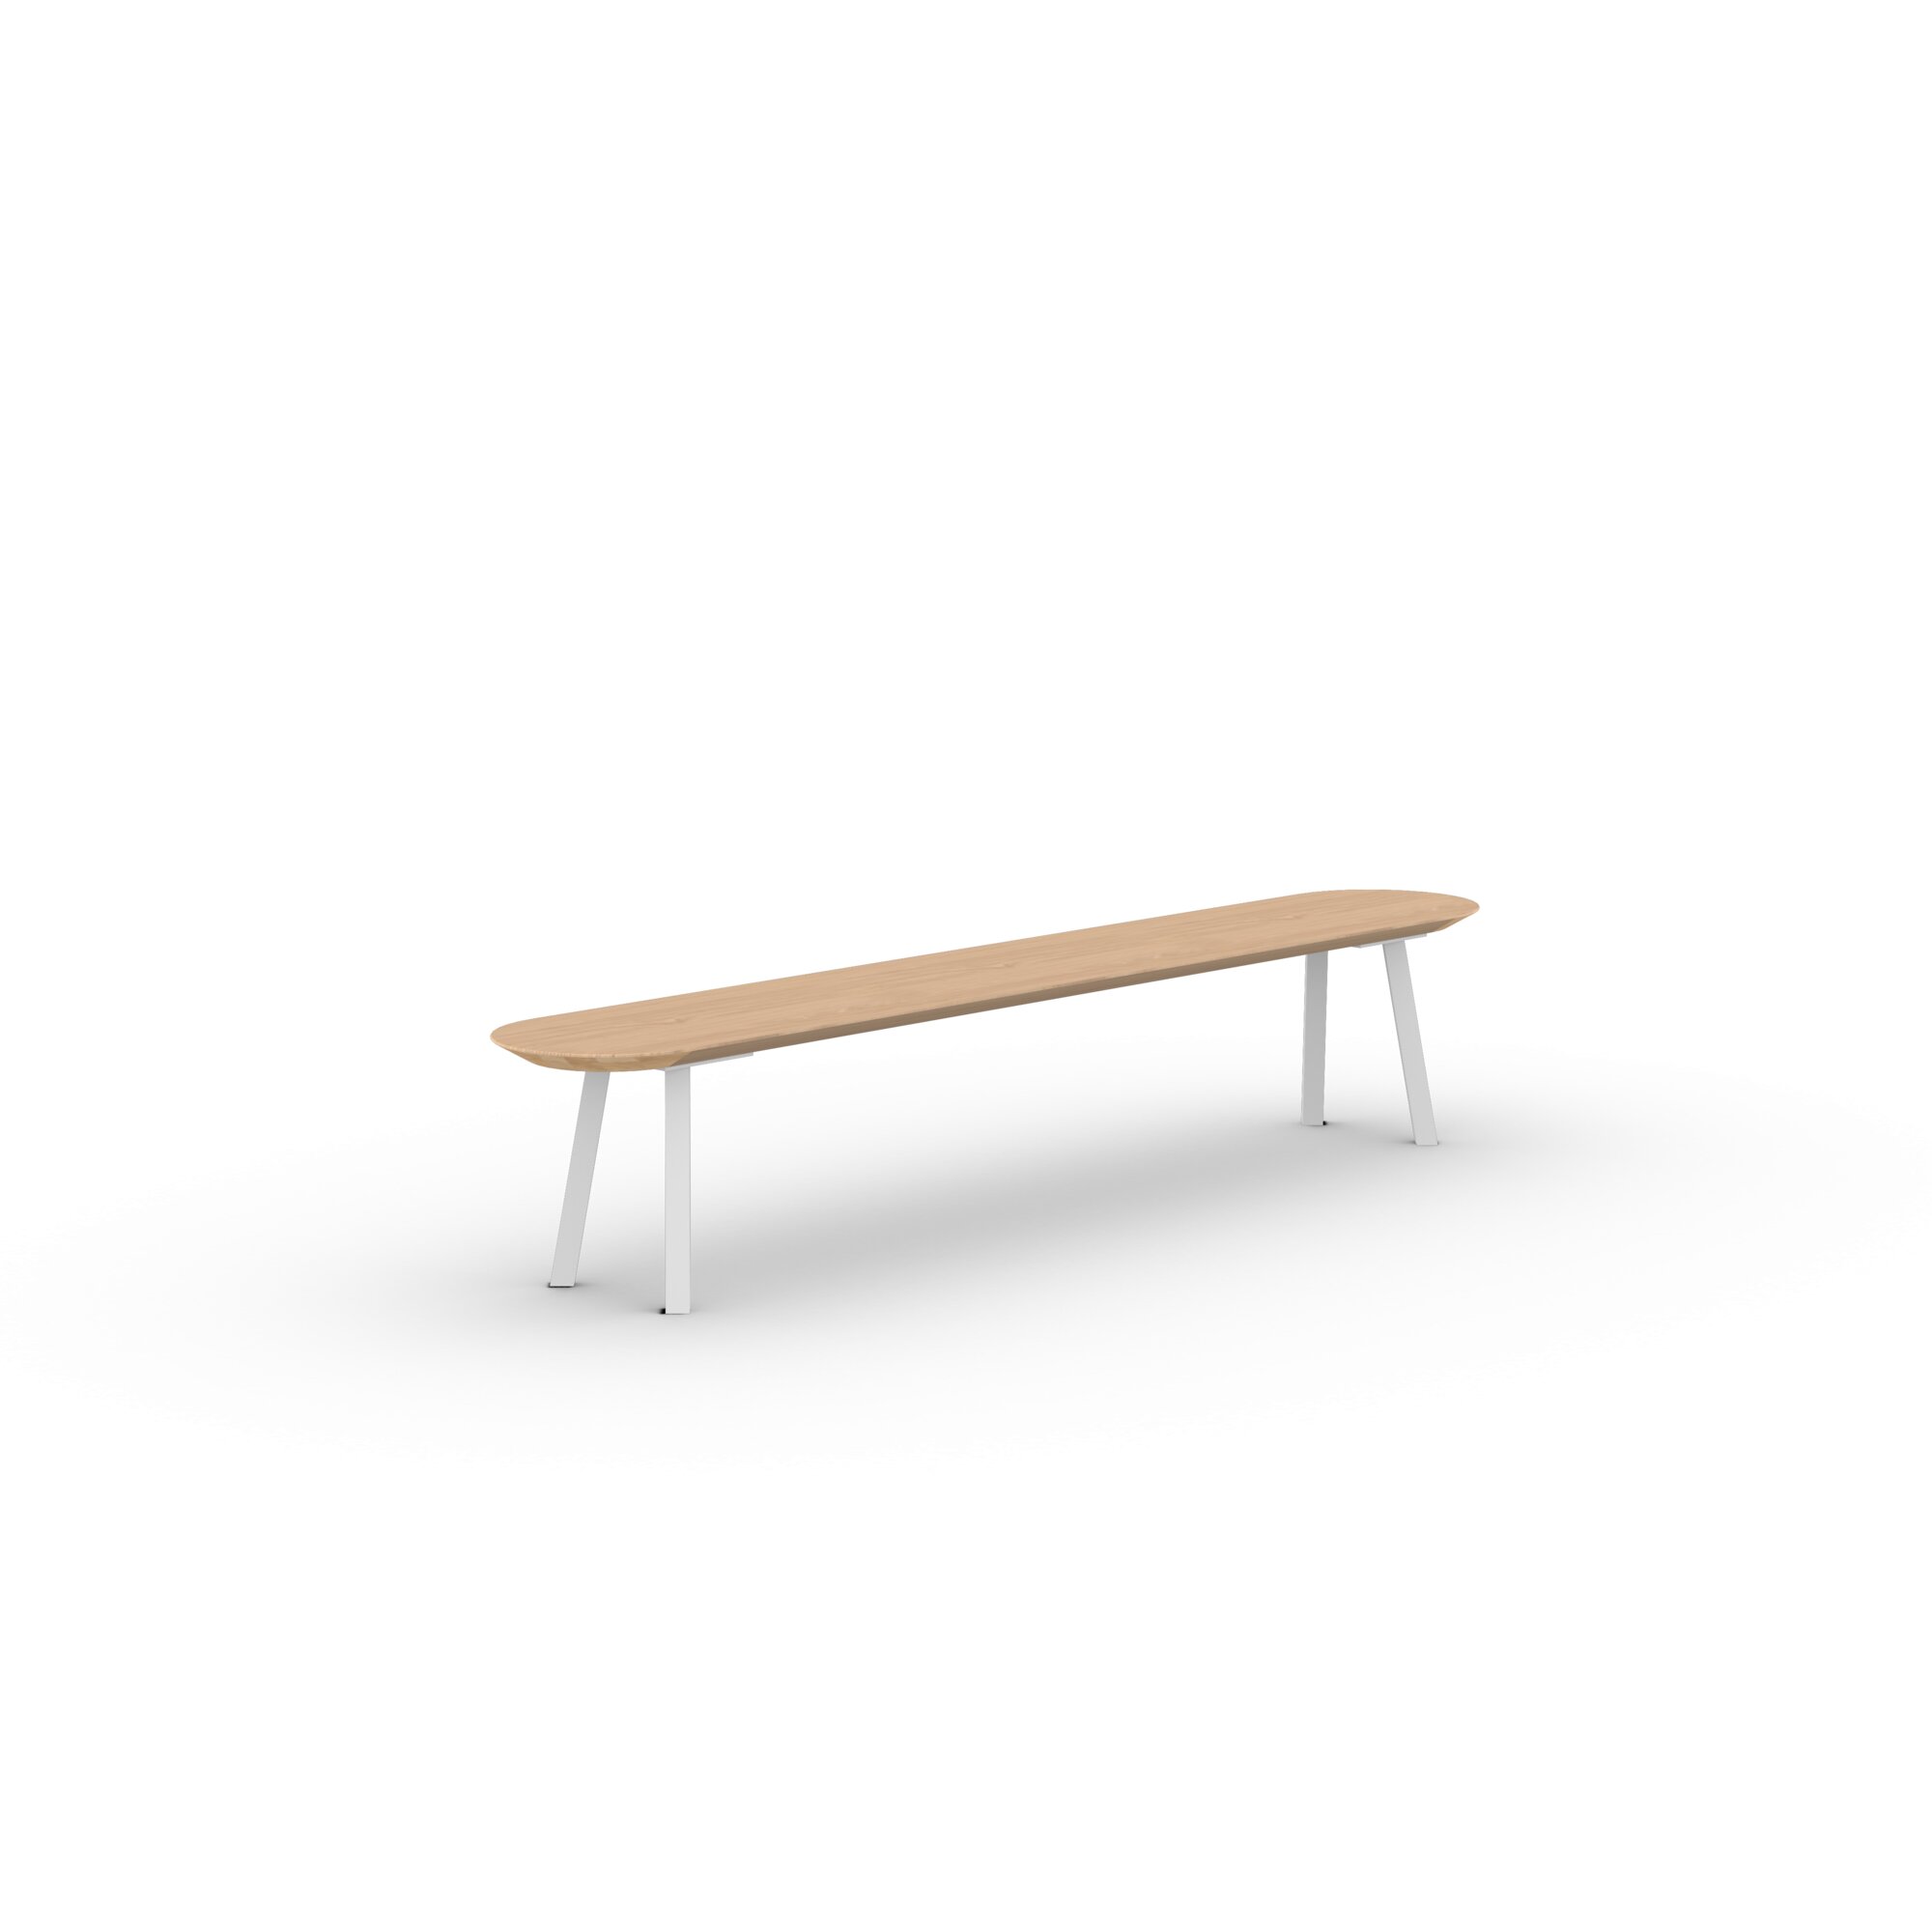 Design Dining Bench | New Classic Bench Steel white powdercoating | Oak hardwax oil natural light 3041 | Studio HENK| 